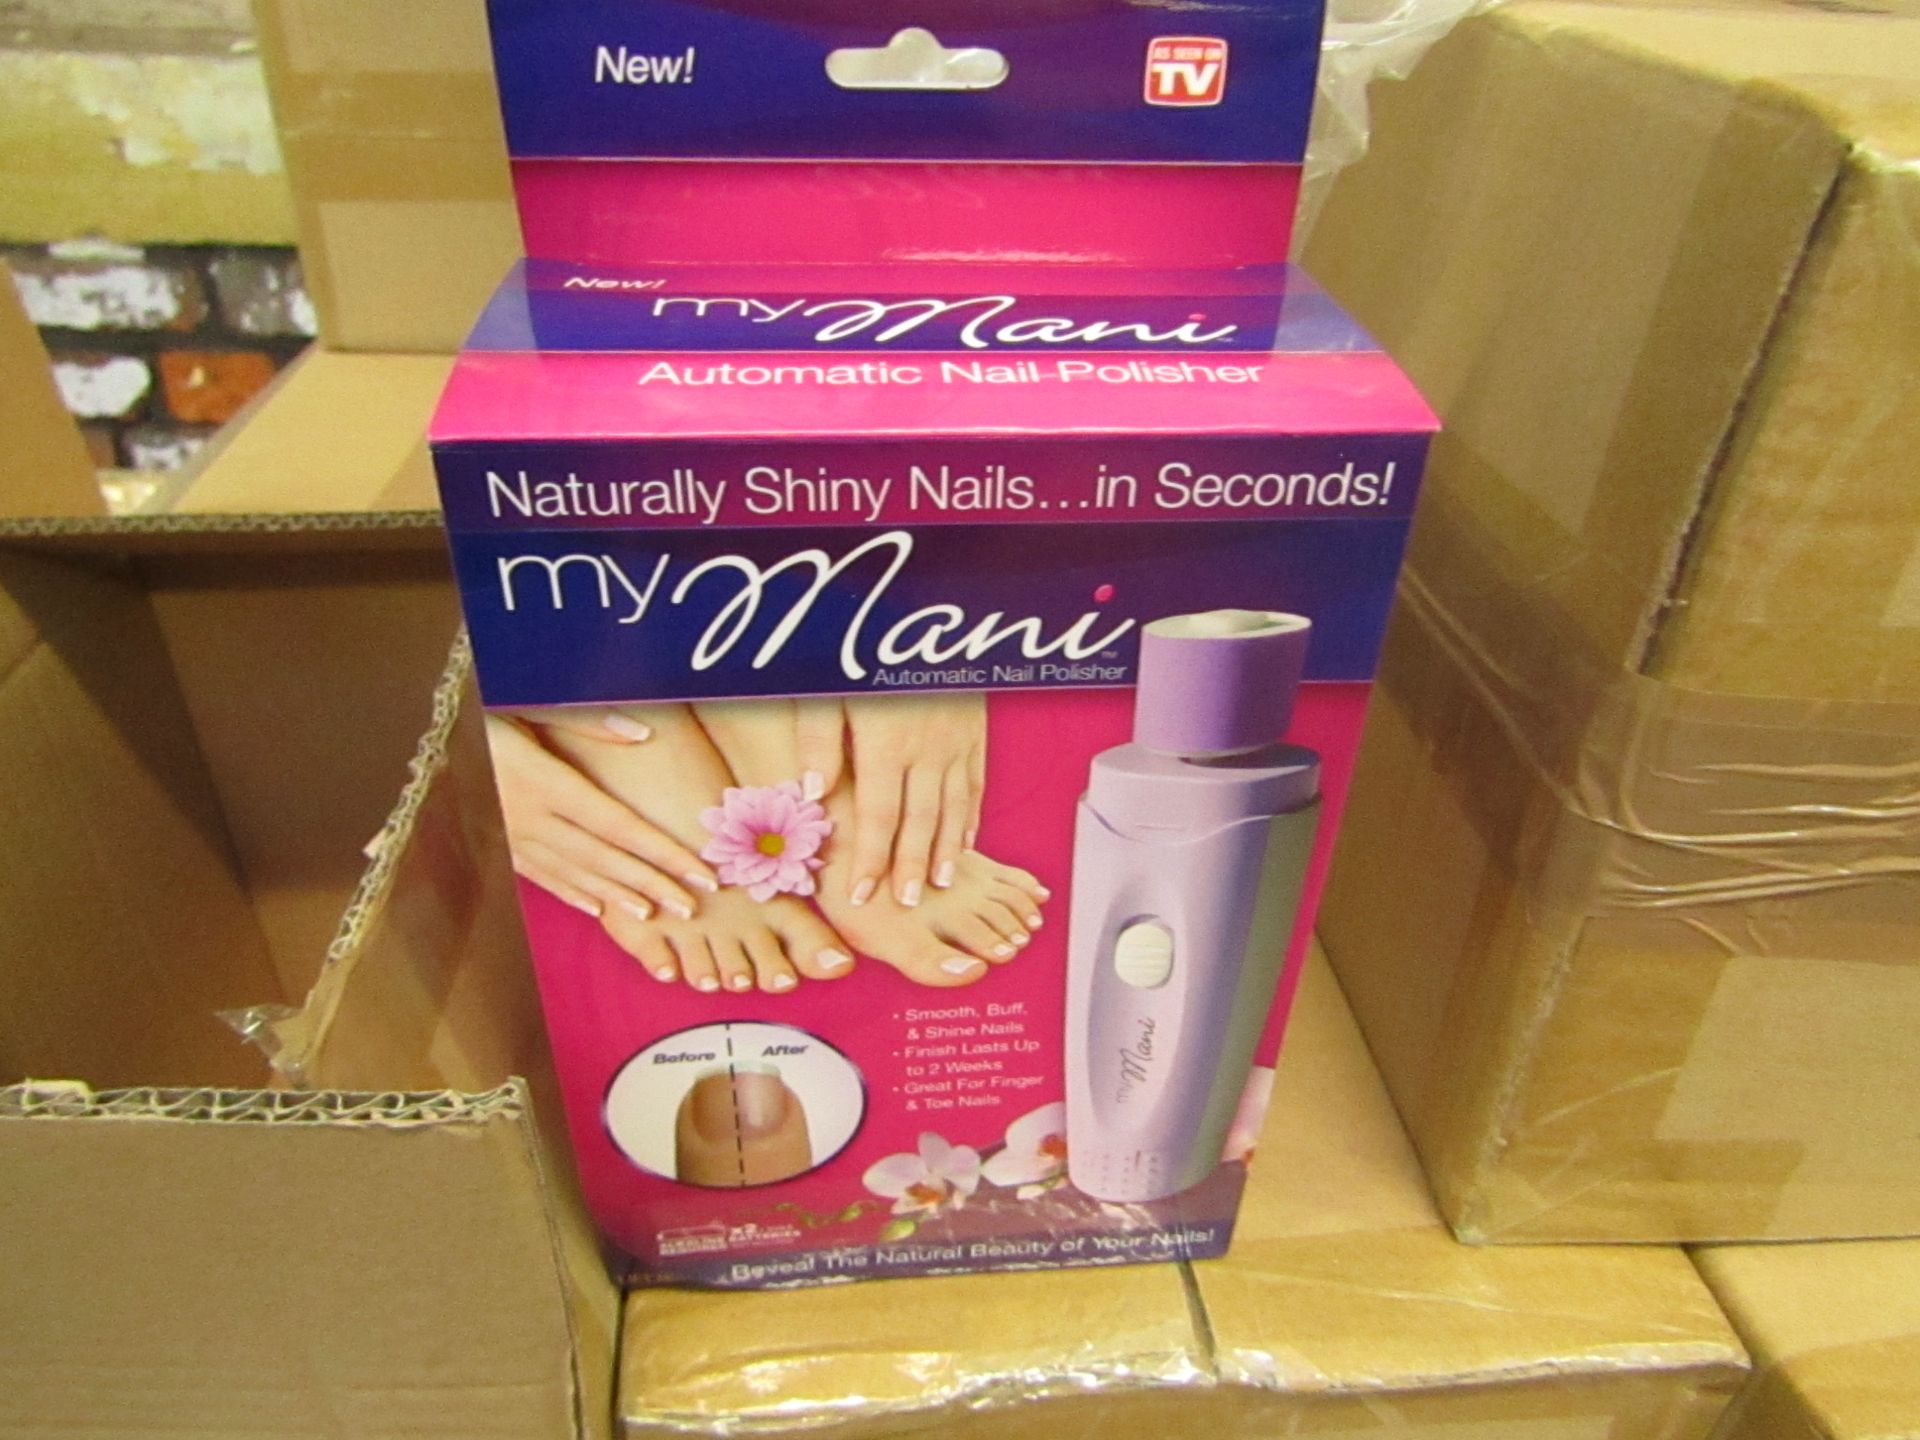 My mani automatic nail polisher - New & Boxed